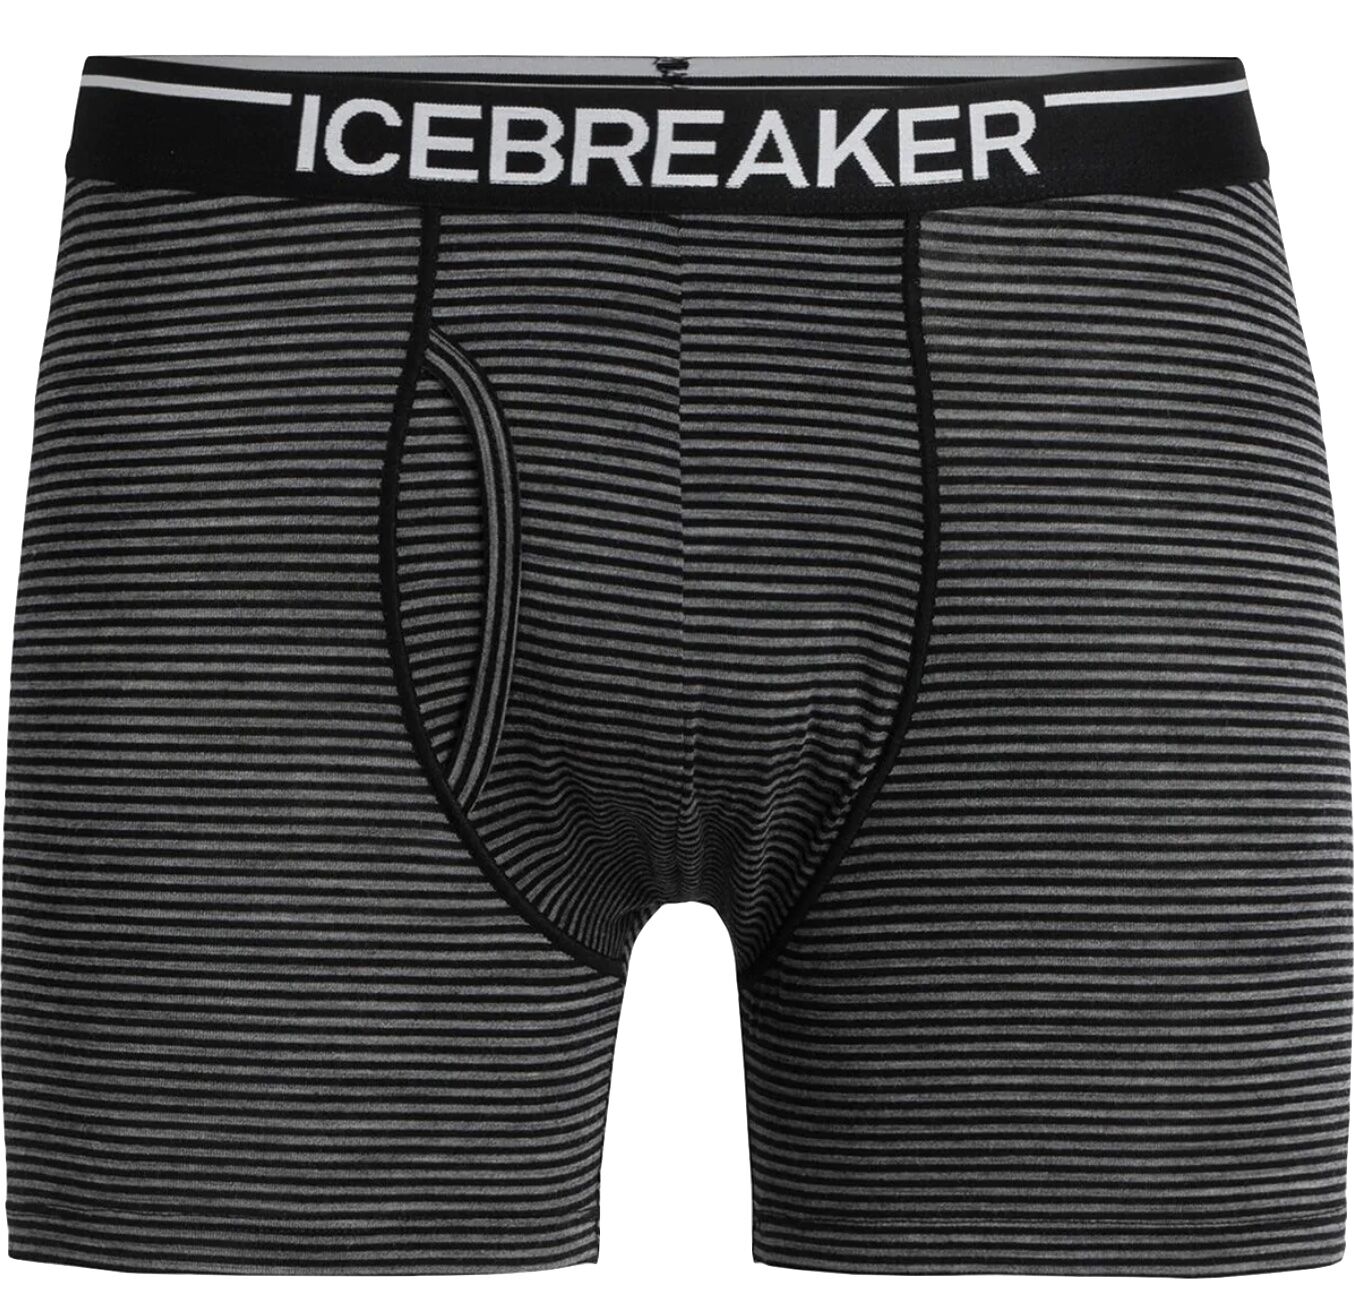 Icebreaker merino boxers